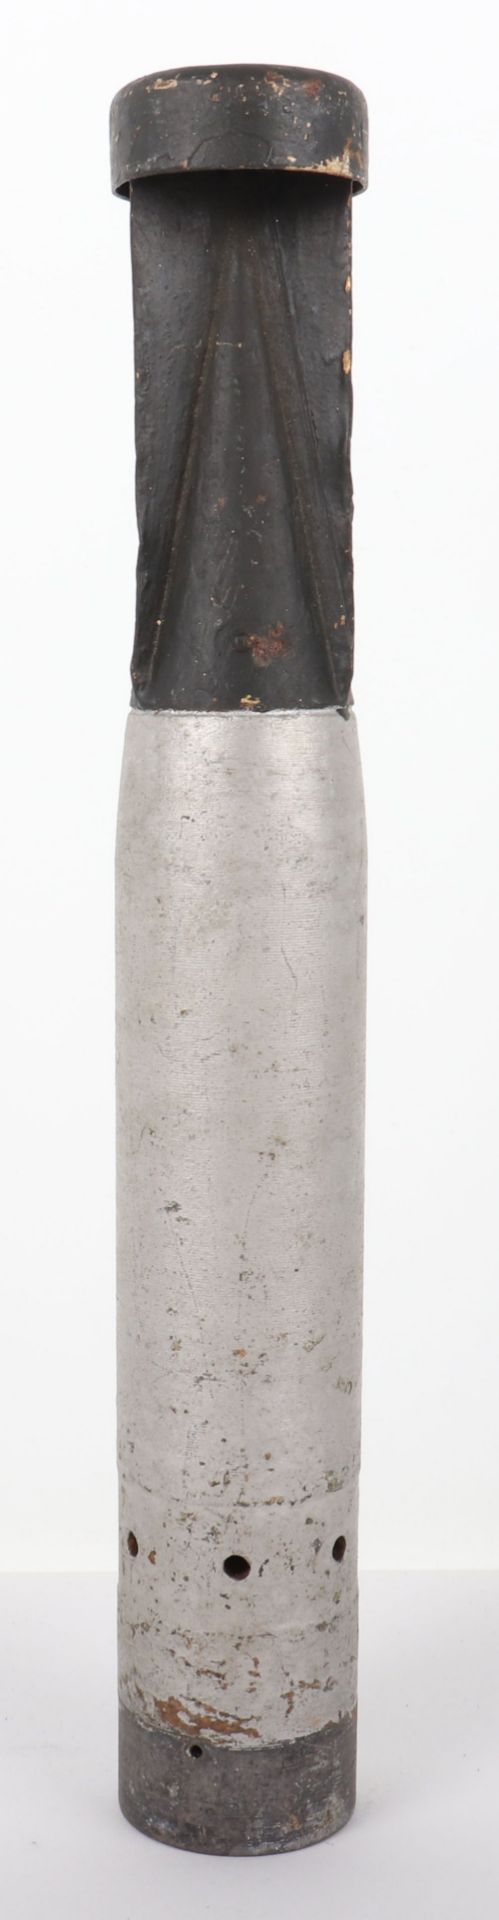 Inert WW2 German Incendiary Bomb - Image 2 of 6